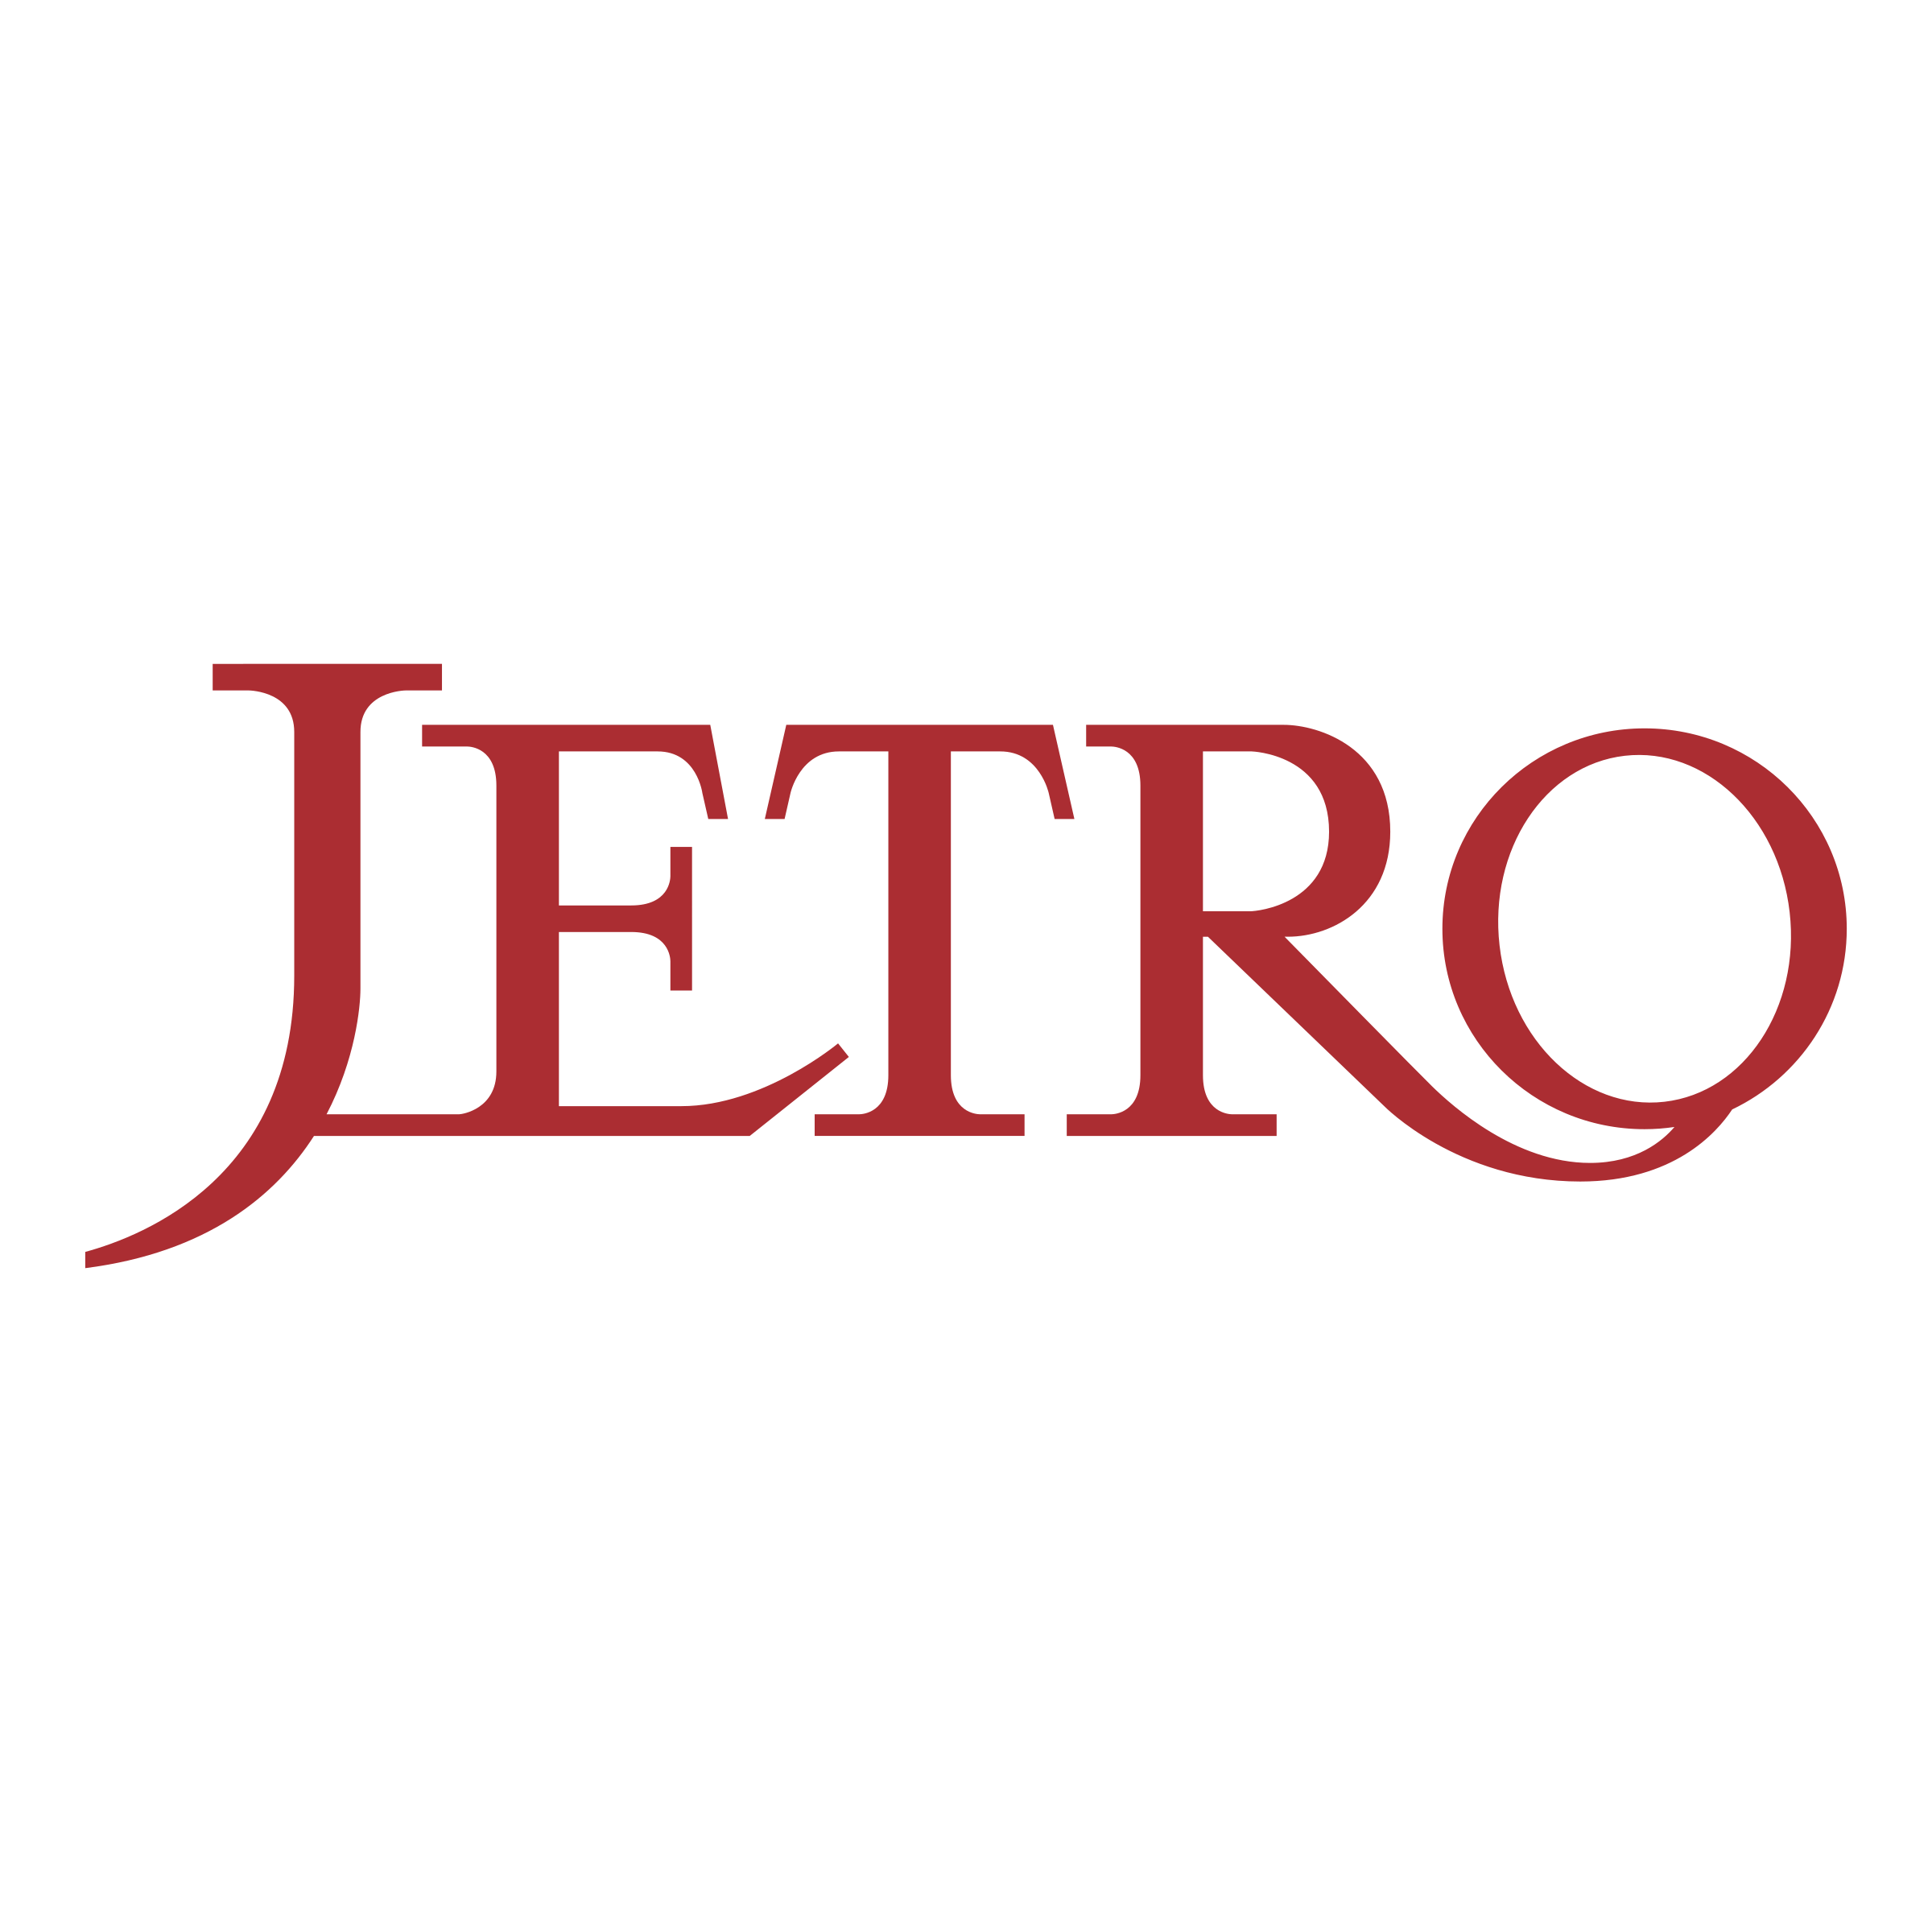 Jetro Logo - Jetro Logo PNG Transparent & SVG Vector